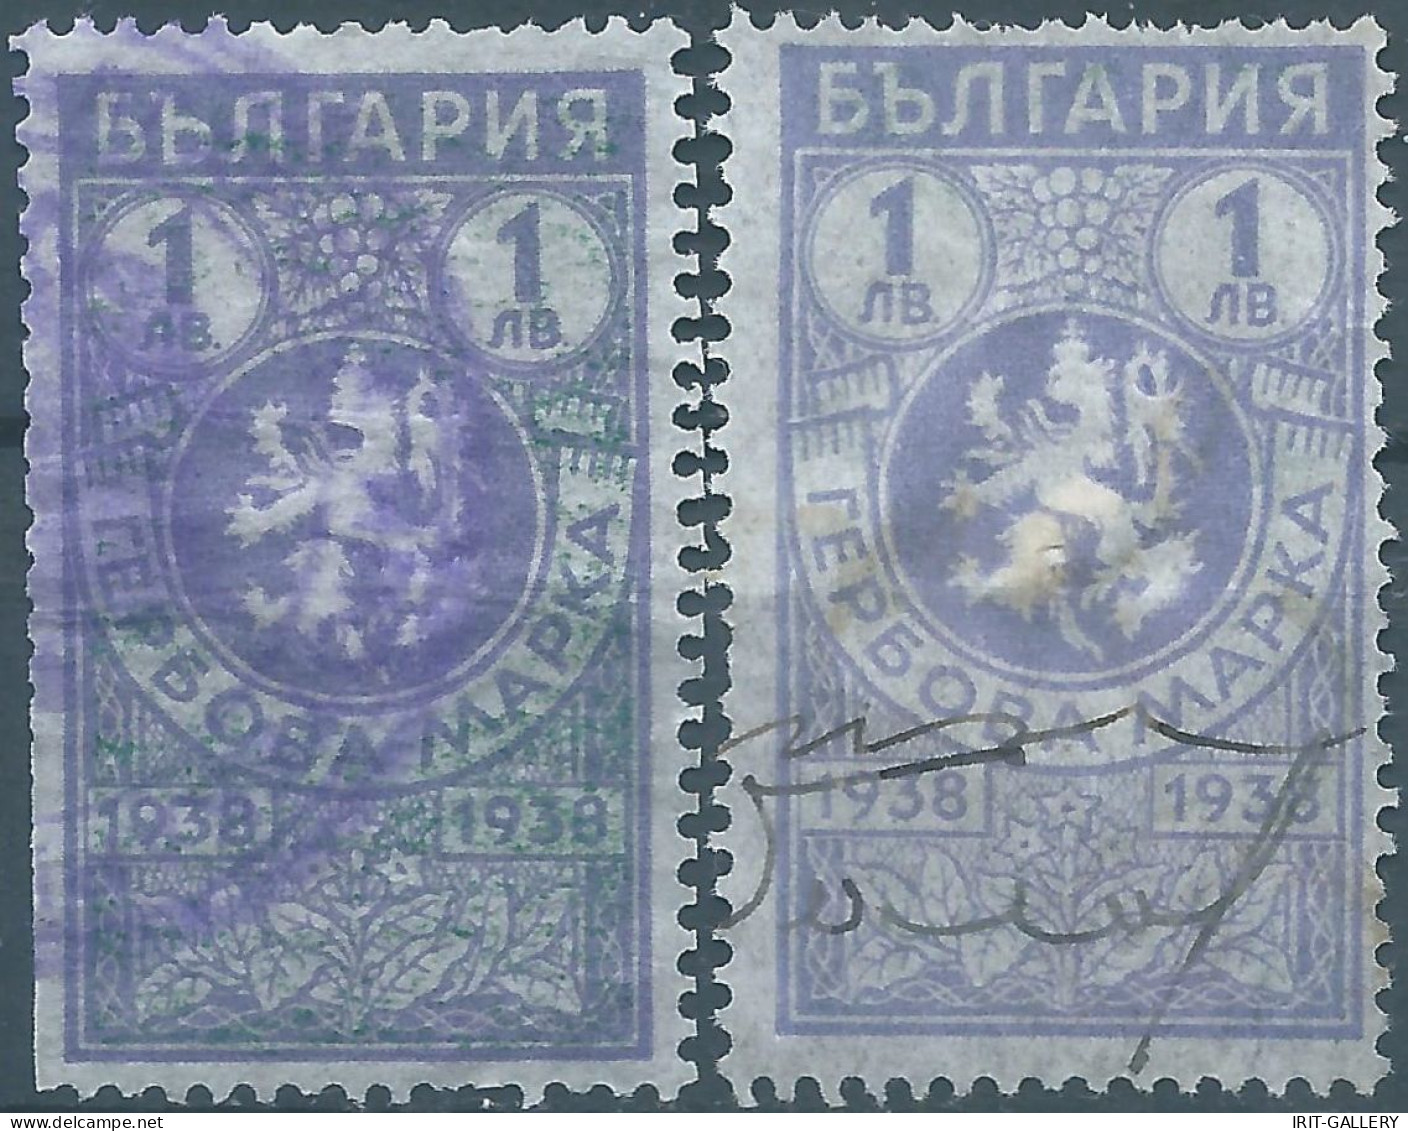 Bulgaria - Bulgarien - Bulgare,1938 Revenue Stamps Tax Fiscal,Used - Dienstzegels